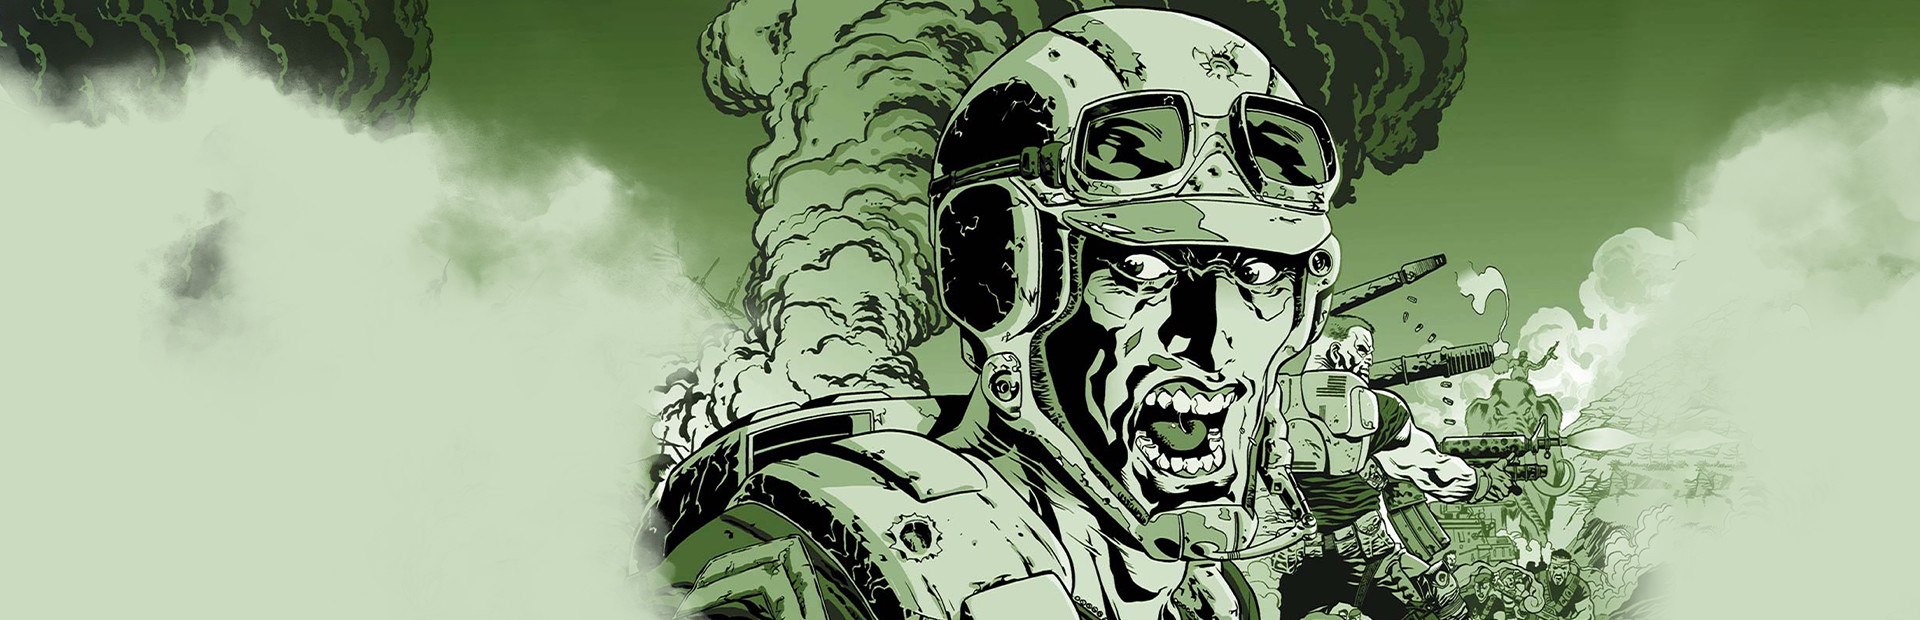 Original War cover image